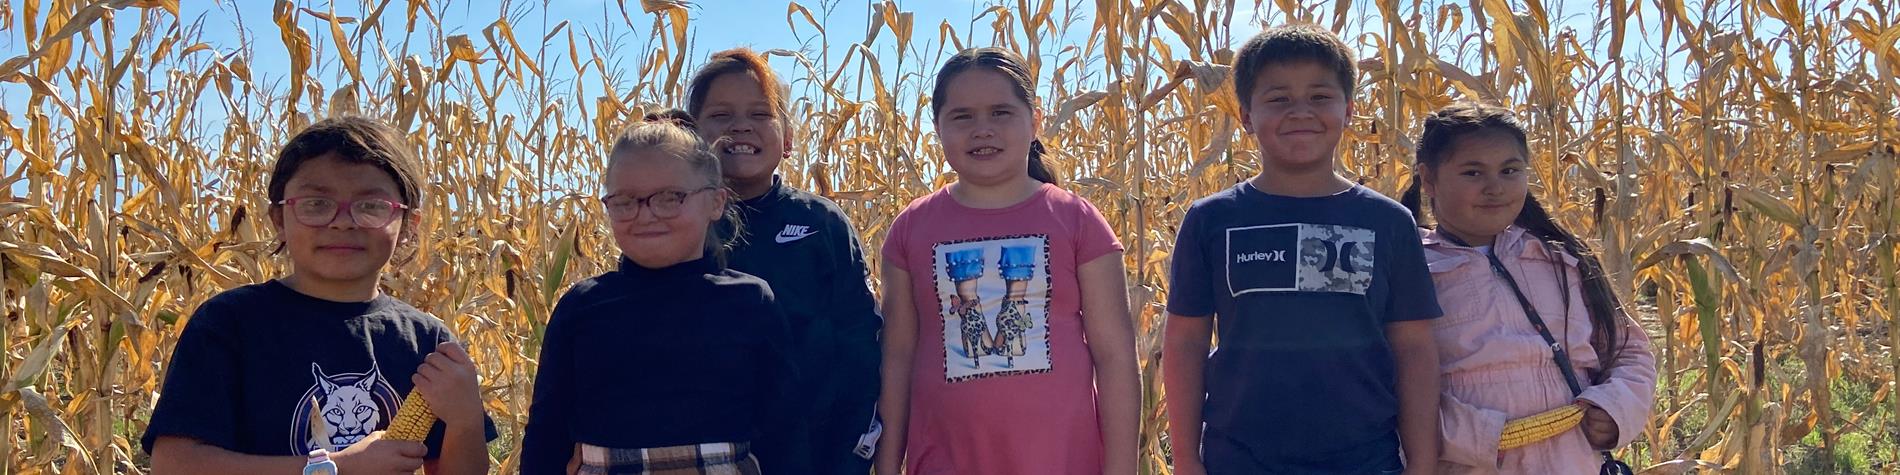 Students in Corn Maze